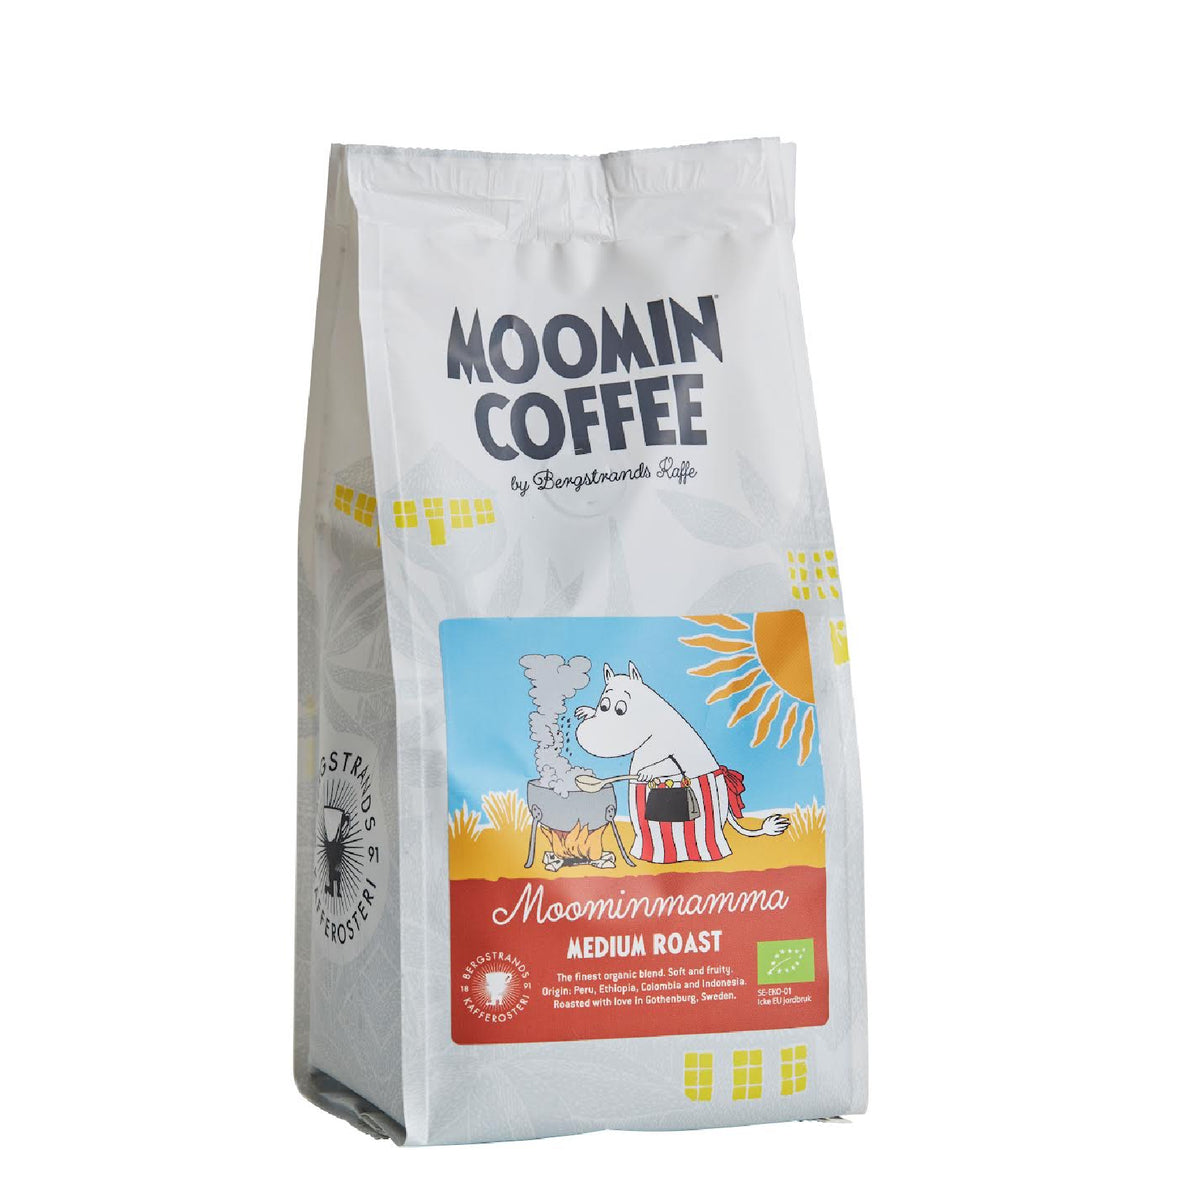 Moomin Coffee Moominmamma medium roast